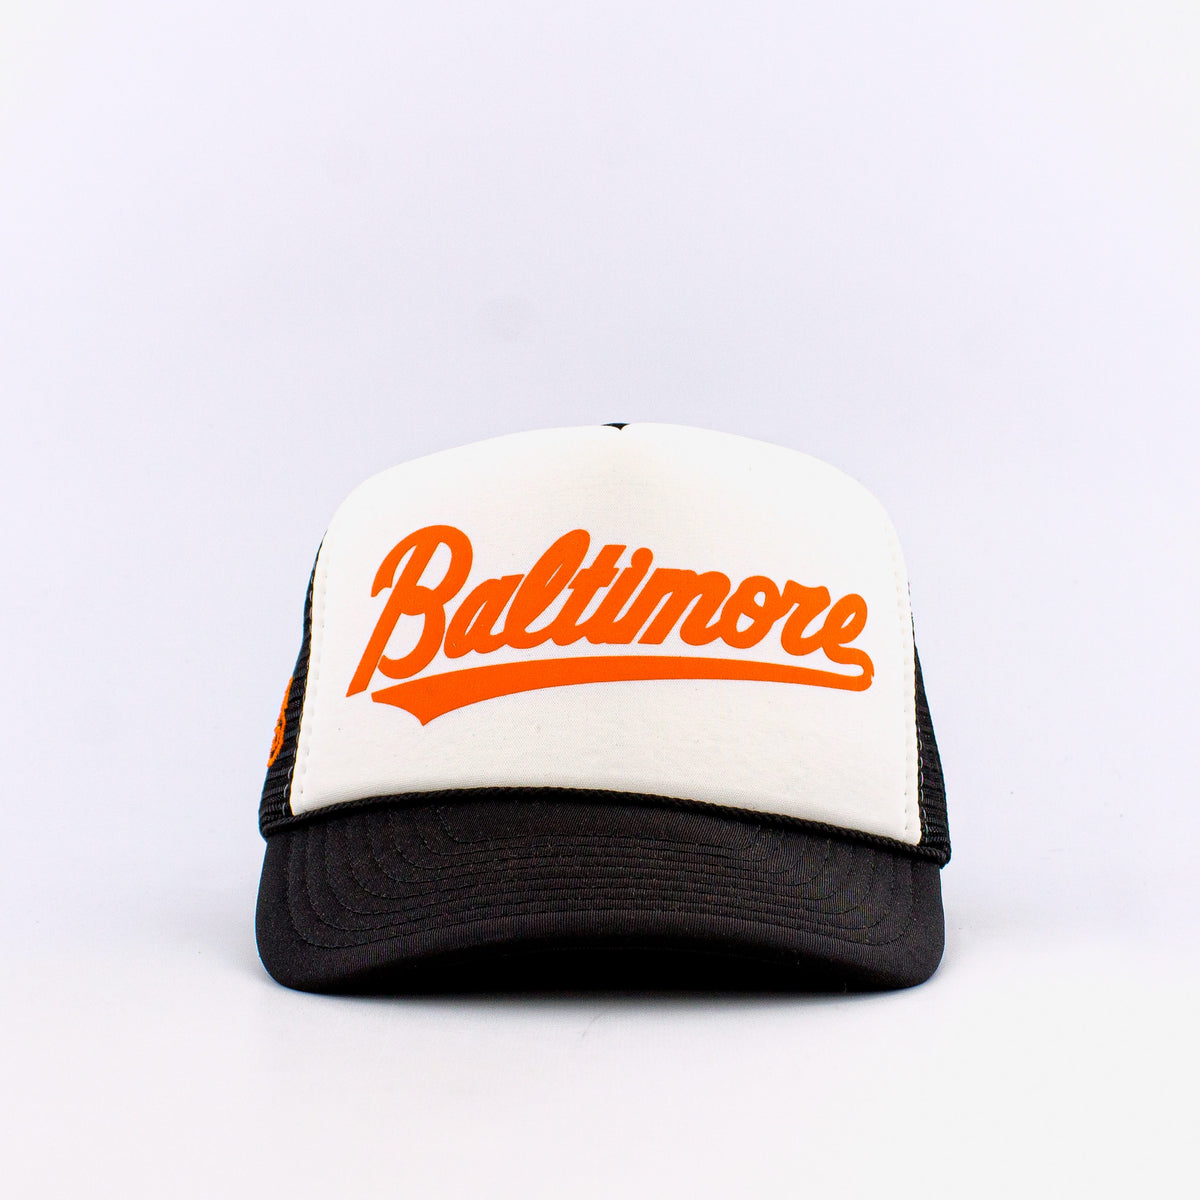 YTS Baltimore Trucker Hat